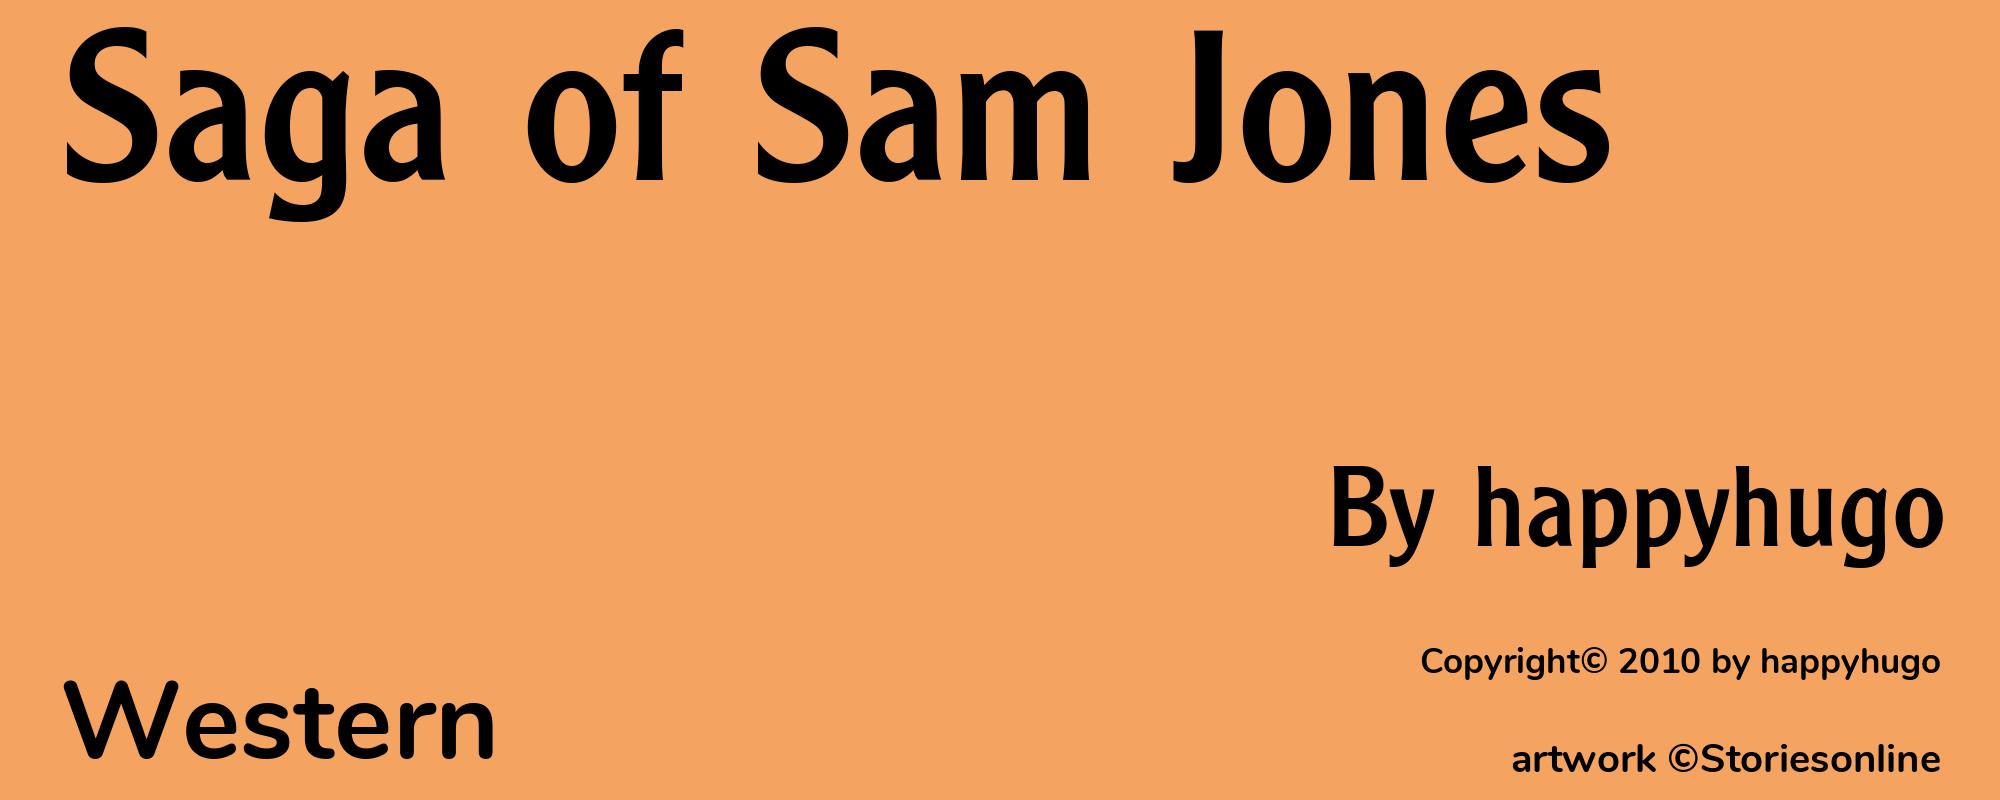 Saga of Sam Jones - Cover